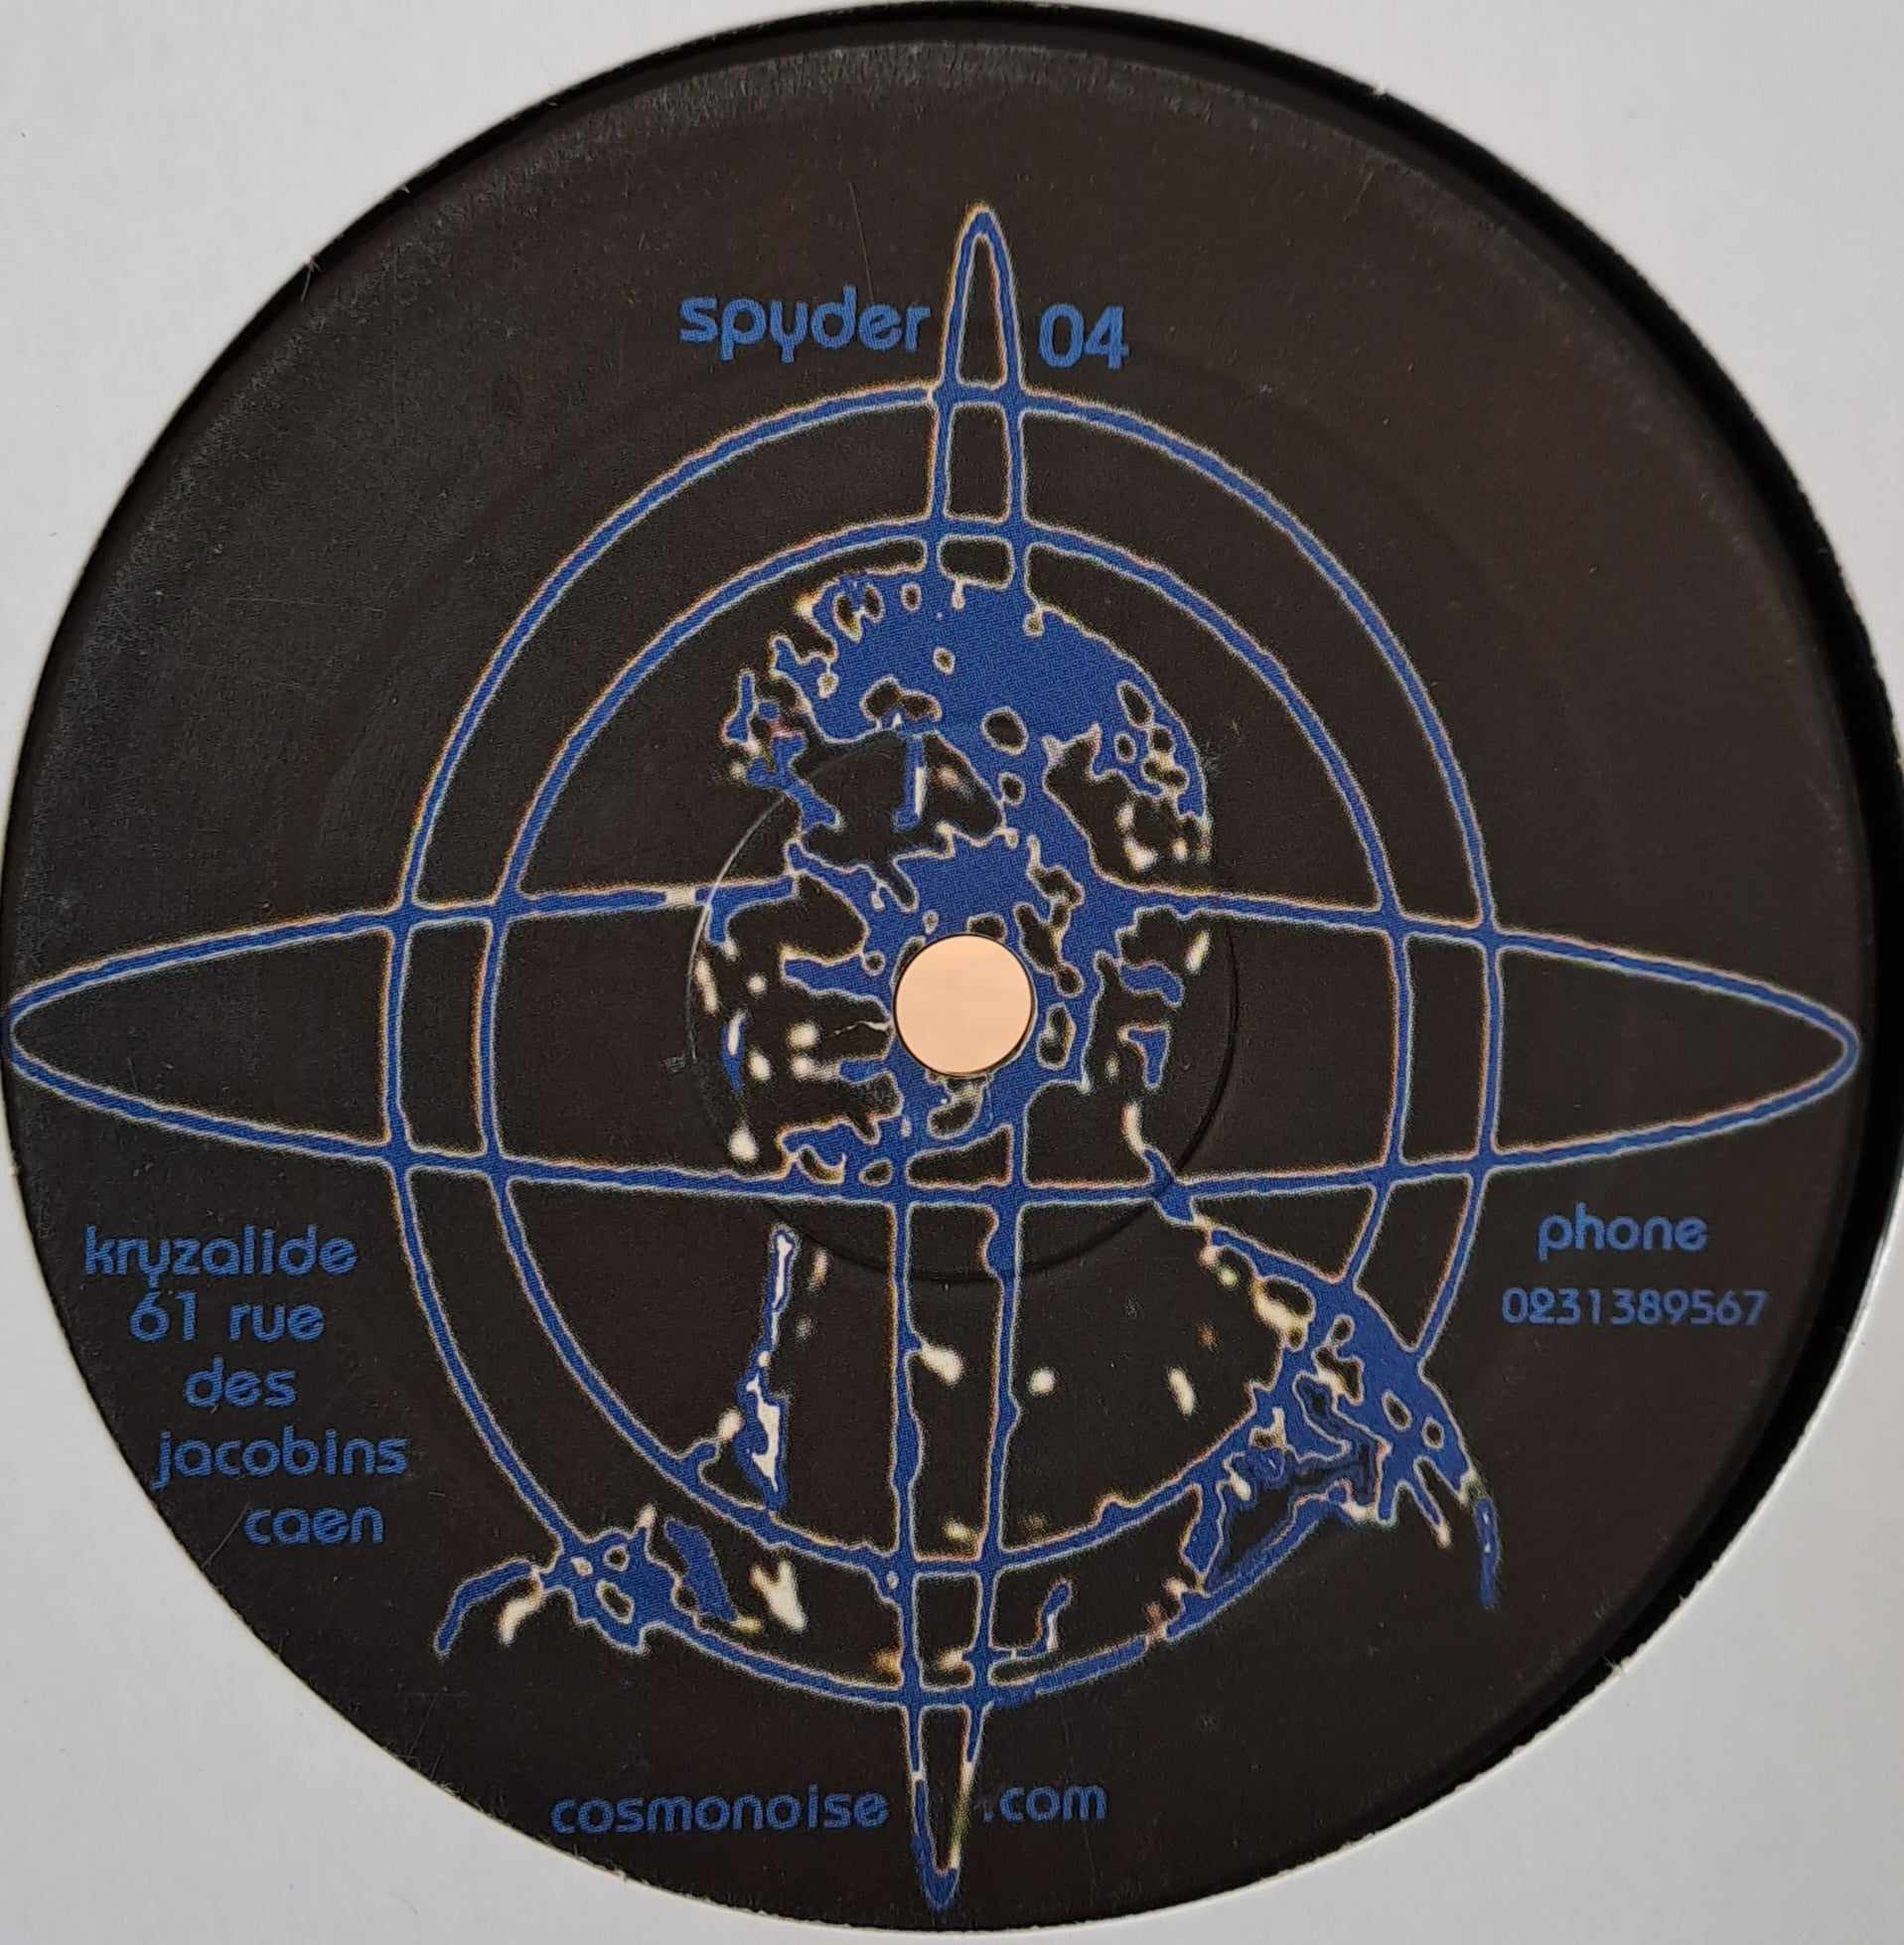 Spyder 04 - vinyle tribecore